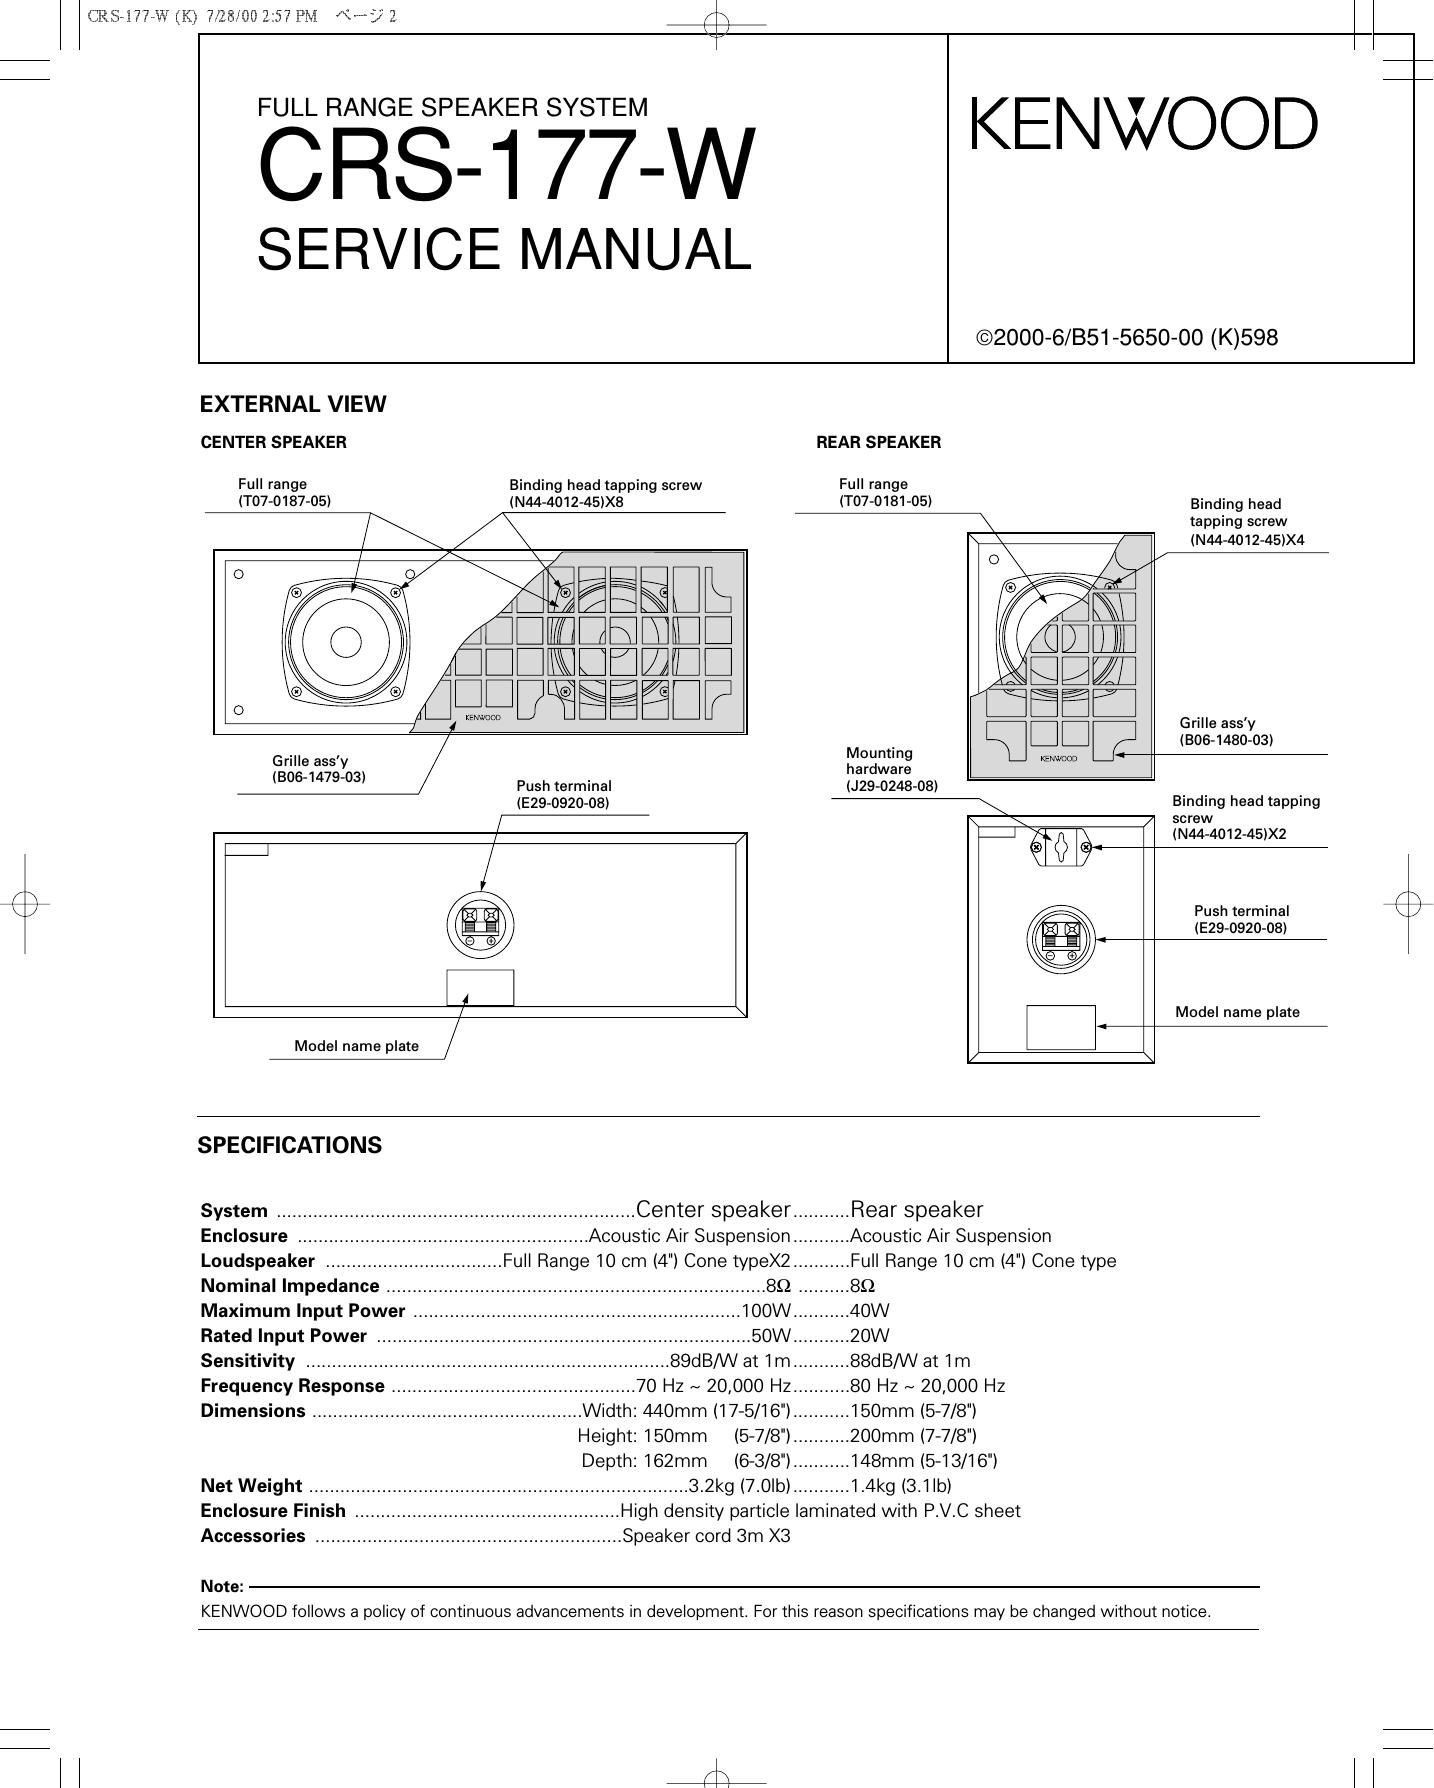 Kenwood CRS 177 W Service Manual